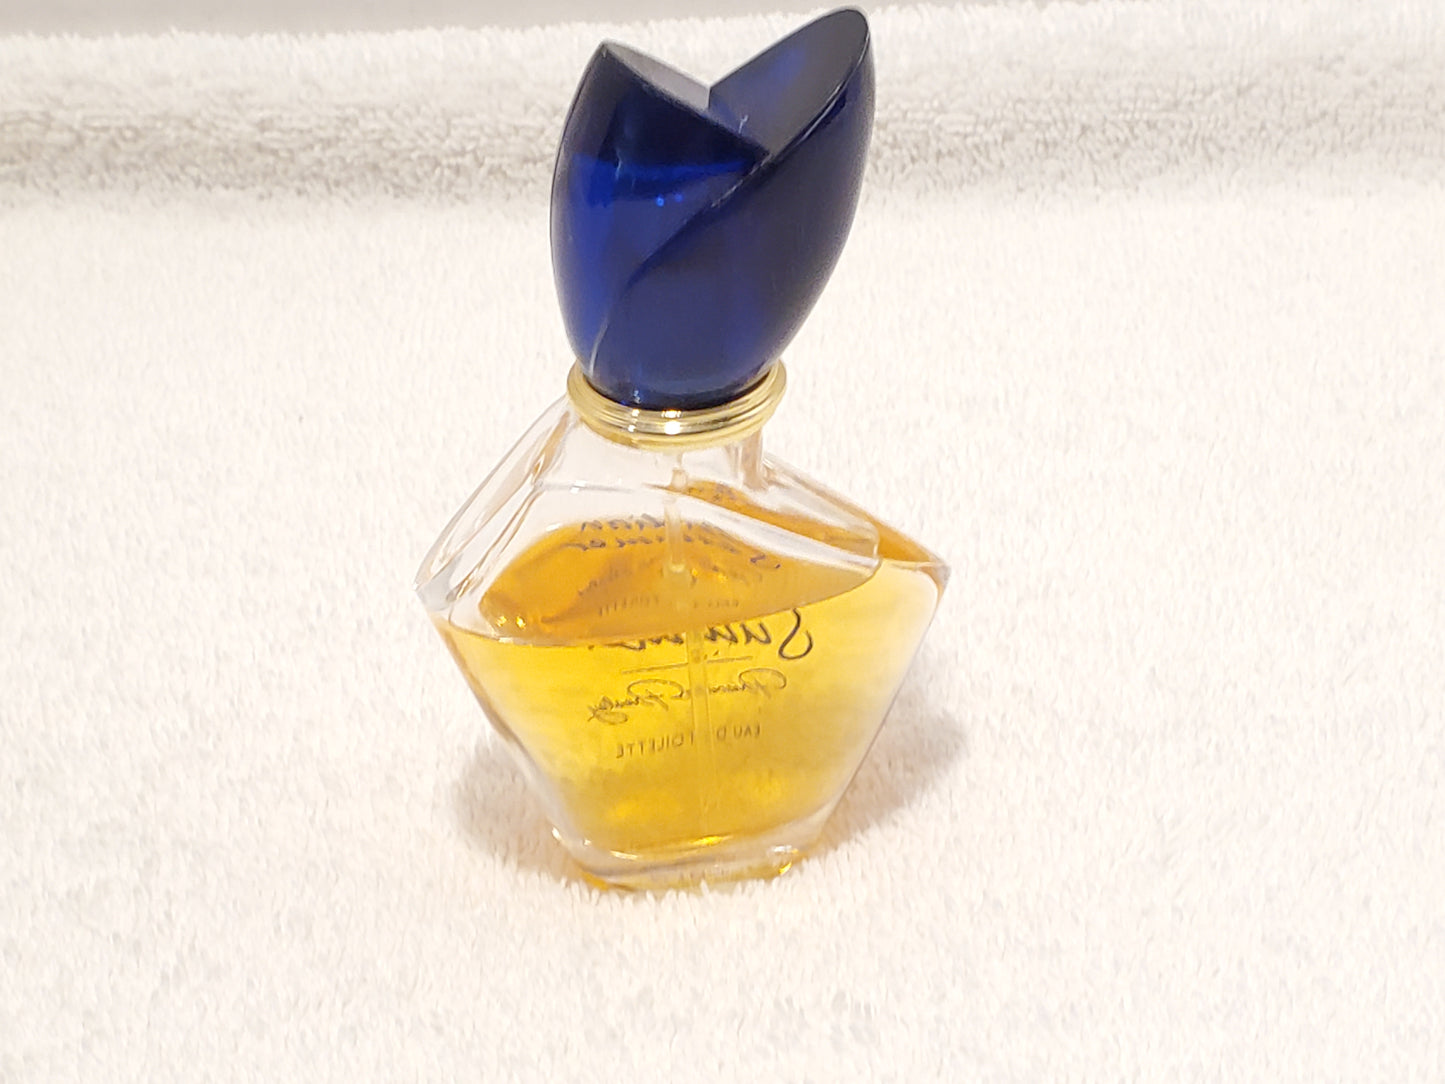 Vintage Indian Summer by Priscilla Presley Women's Perfume Spray 1.0 oz Bottle